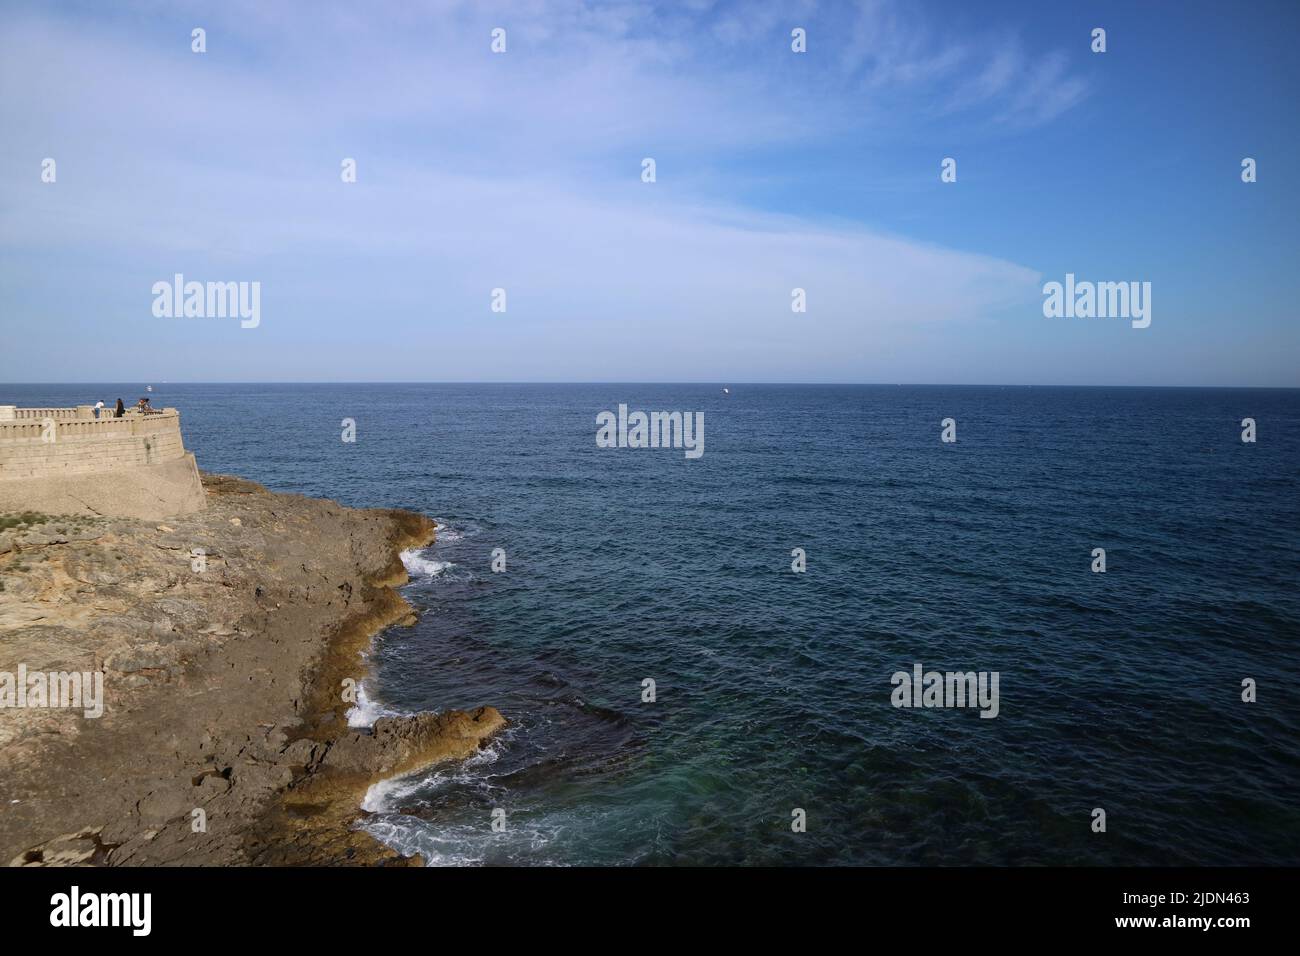 The coast of Santa Maria di Leuca, city in Puglia region, Italy. Stock Photo